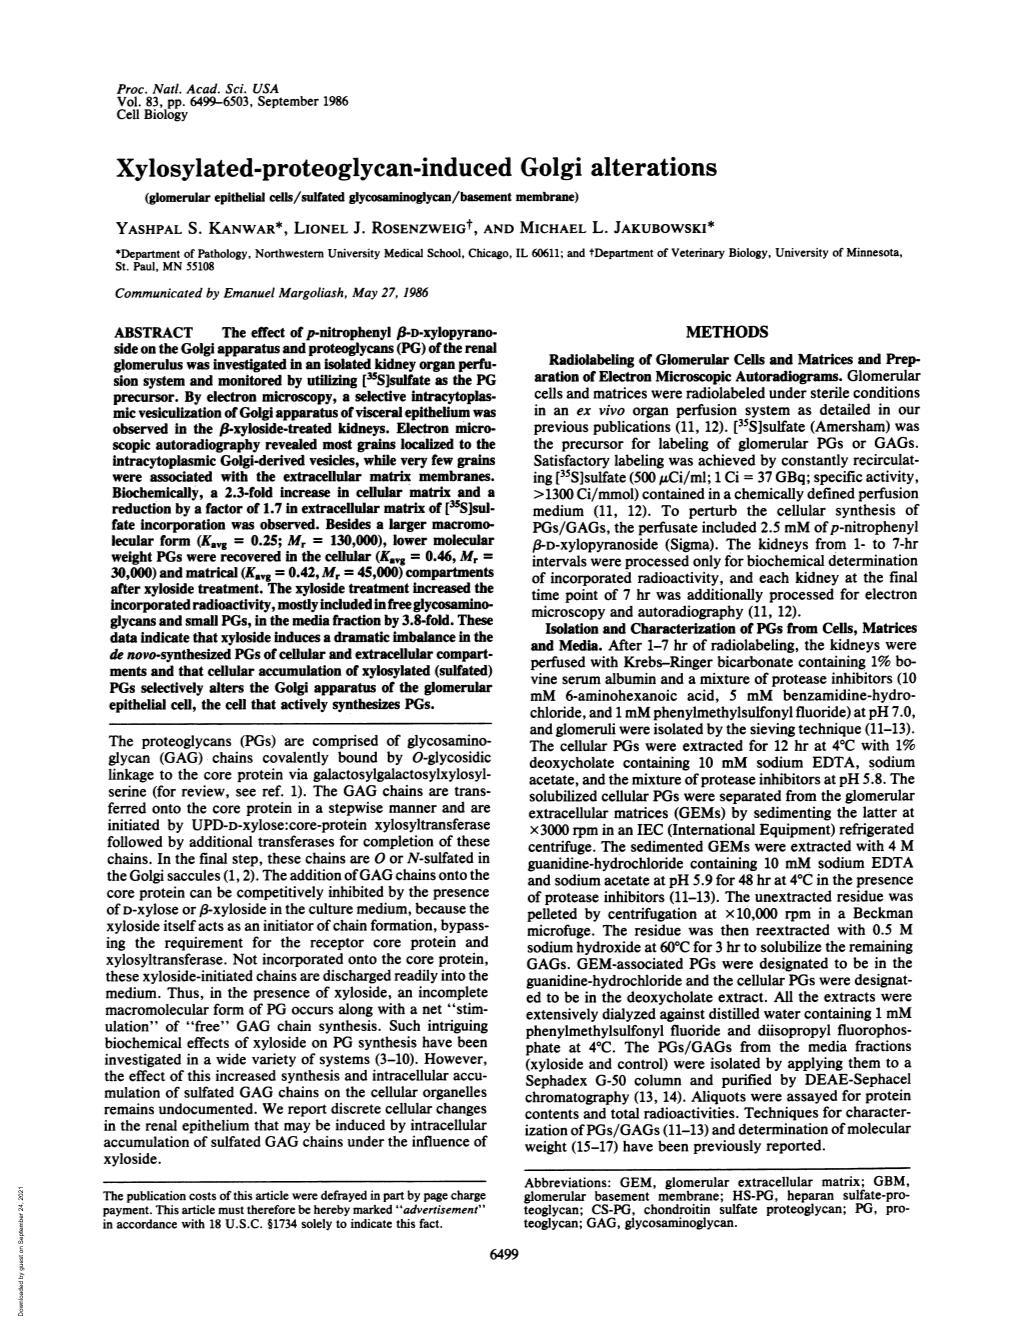 Xylosylated-Proteoglycan-Induced Golgi Alterations (Glomerular Epithelial Cells/Sulfated Glycosaminoglycan/Basement Membrane) YASHPAL S